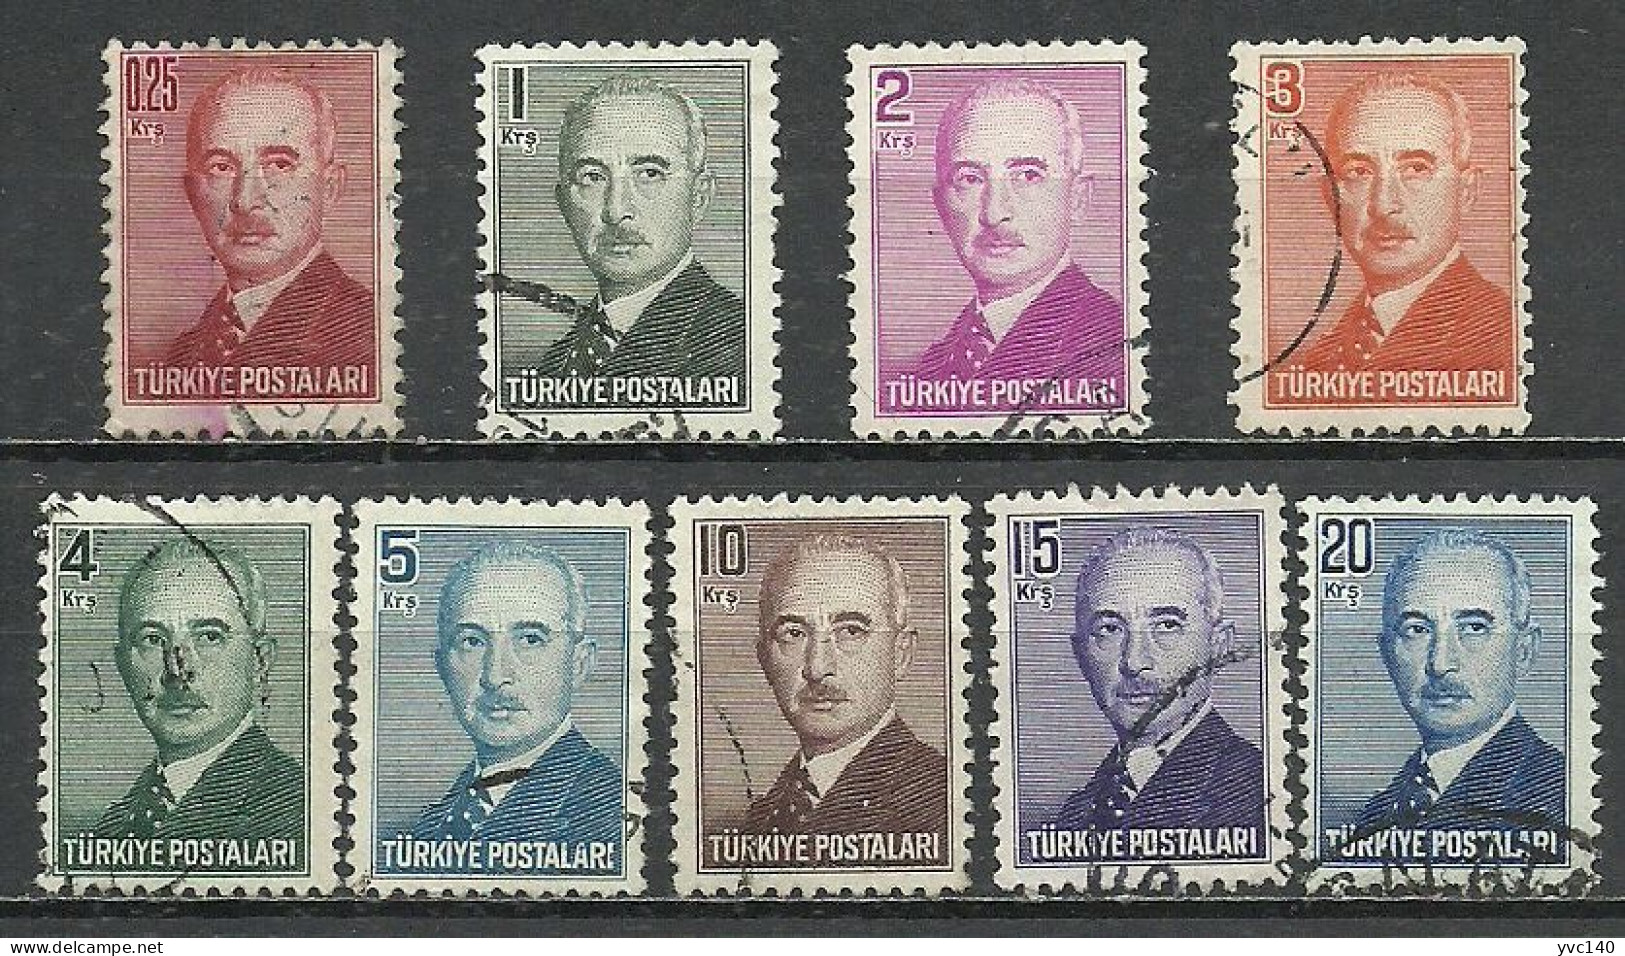 Turkey; 1948 London Printing Inonu Postage Stamps - Used Stamps